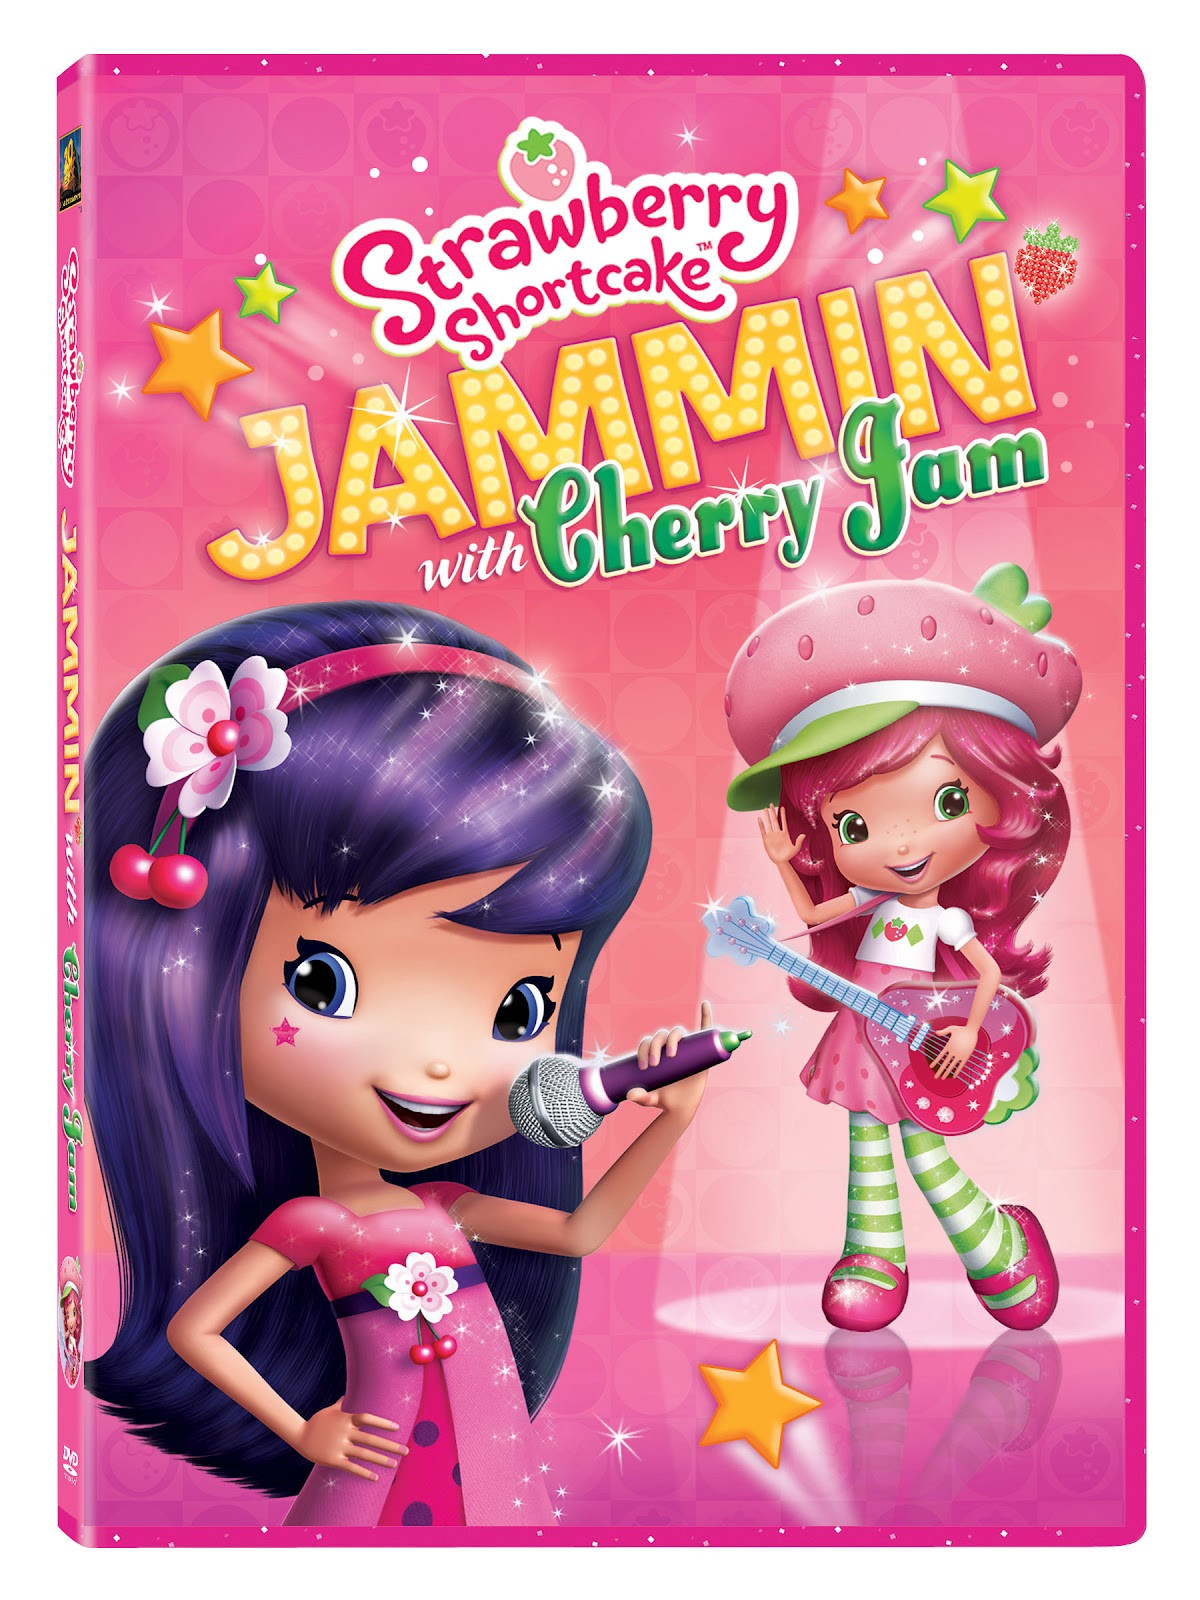 Strawberry Shortcake Dvds
 "Cherry Jam" Inspired Recipes plus Strawberry Shortcake